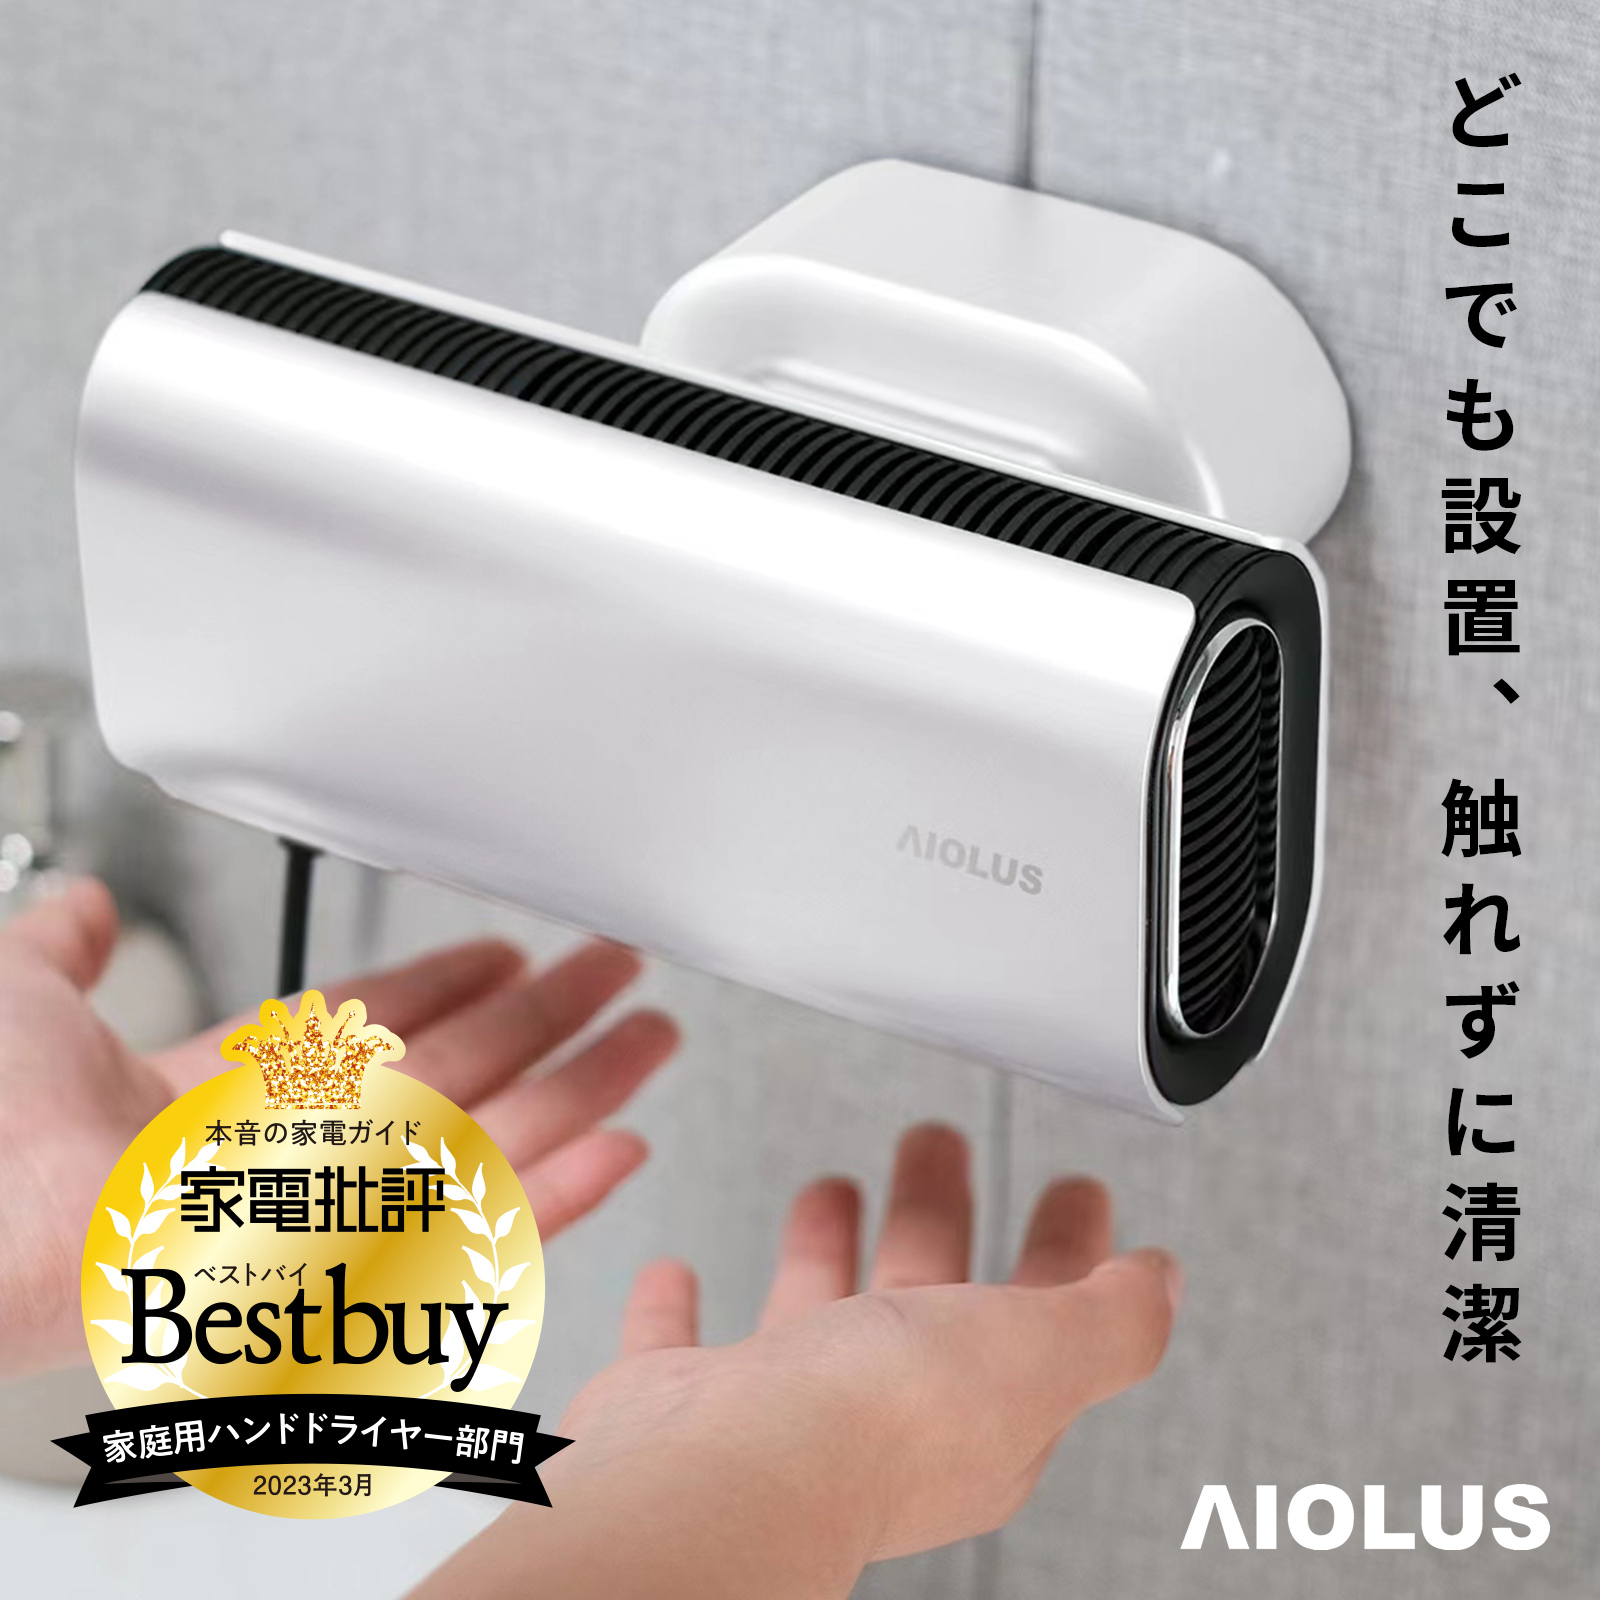 AIOLUS 家庭用ハンドドライヤー Hand Dryer White 非接触 温風 スタンド付き 工事不要 Nyuhd-210W